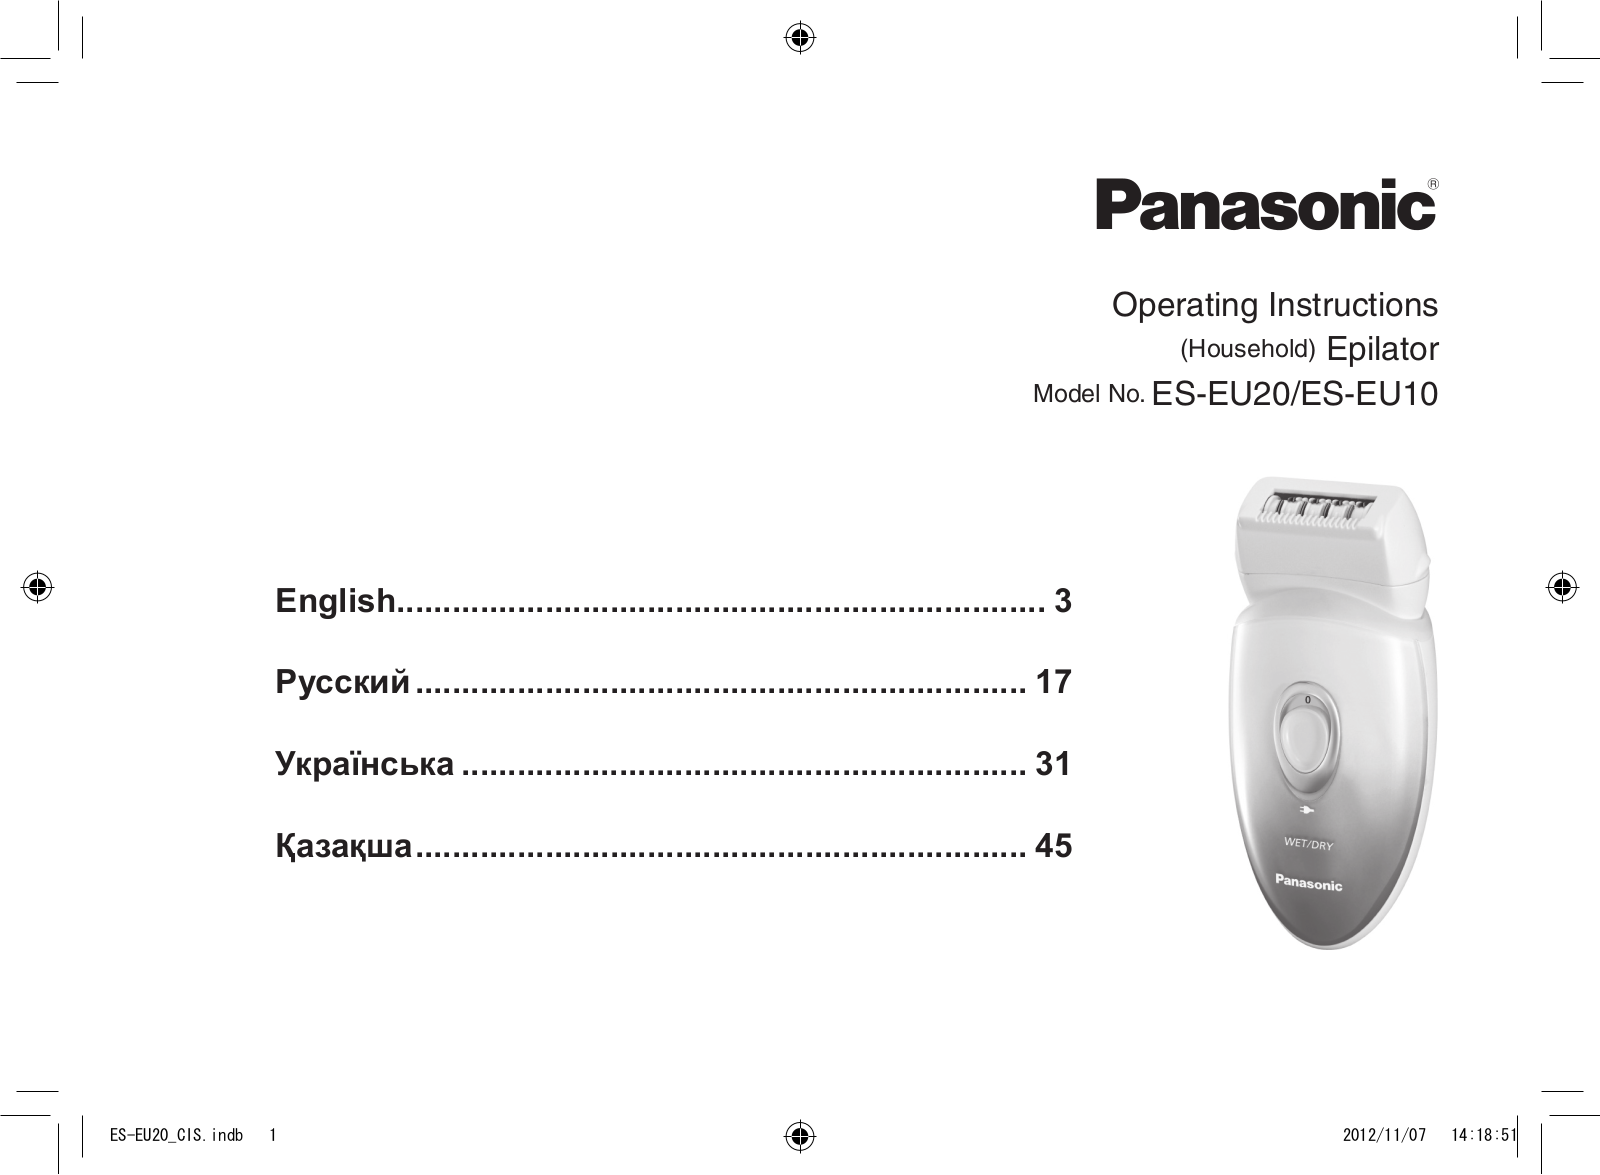 Panasonic ES-EU10-V520 User Manual